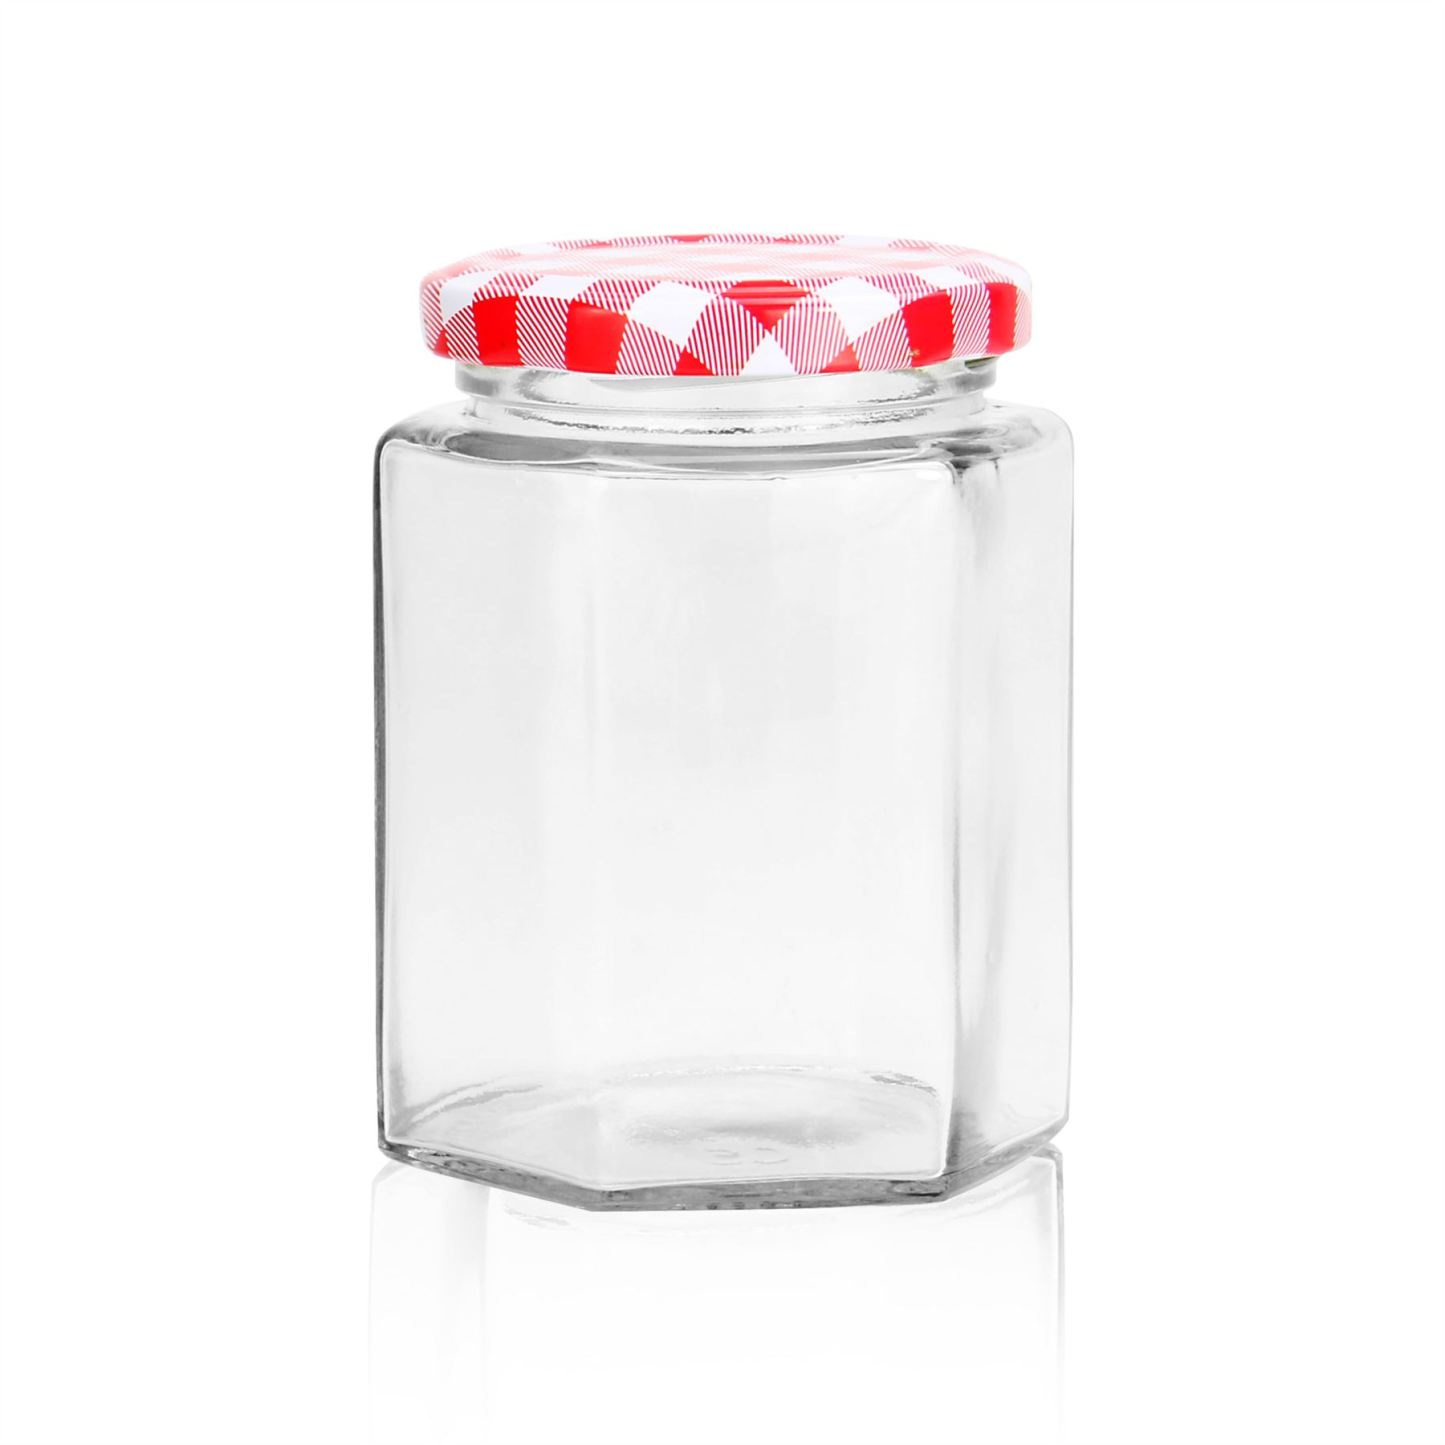 Hexagonal Mouth Glass Jam Jars - Set of 24 | M&W